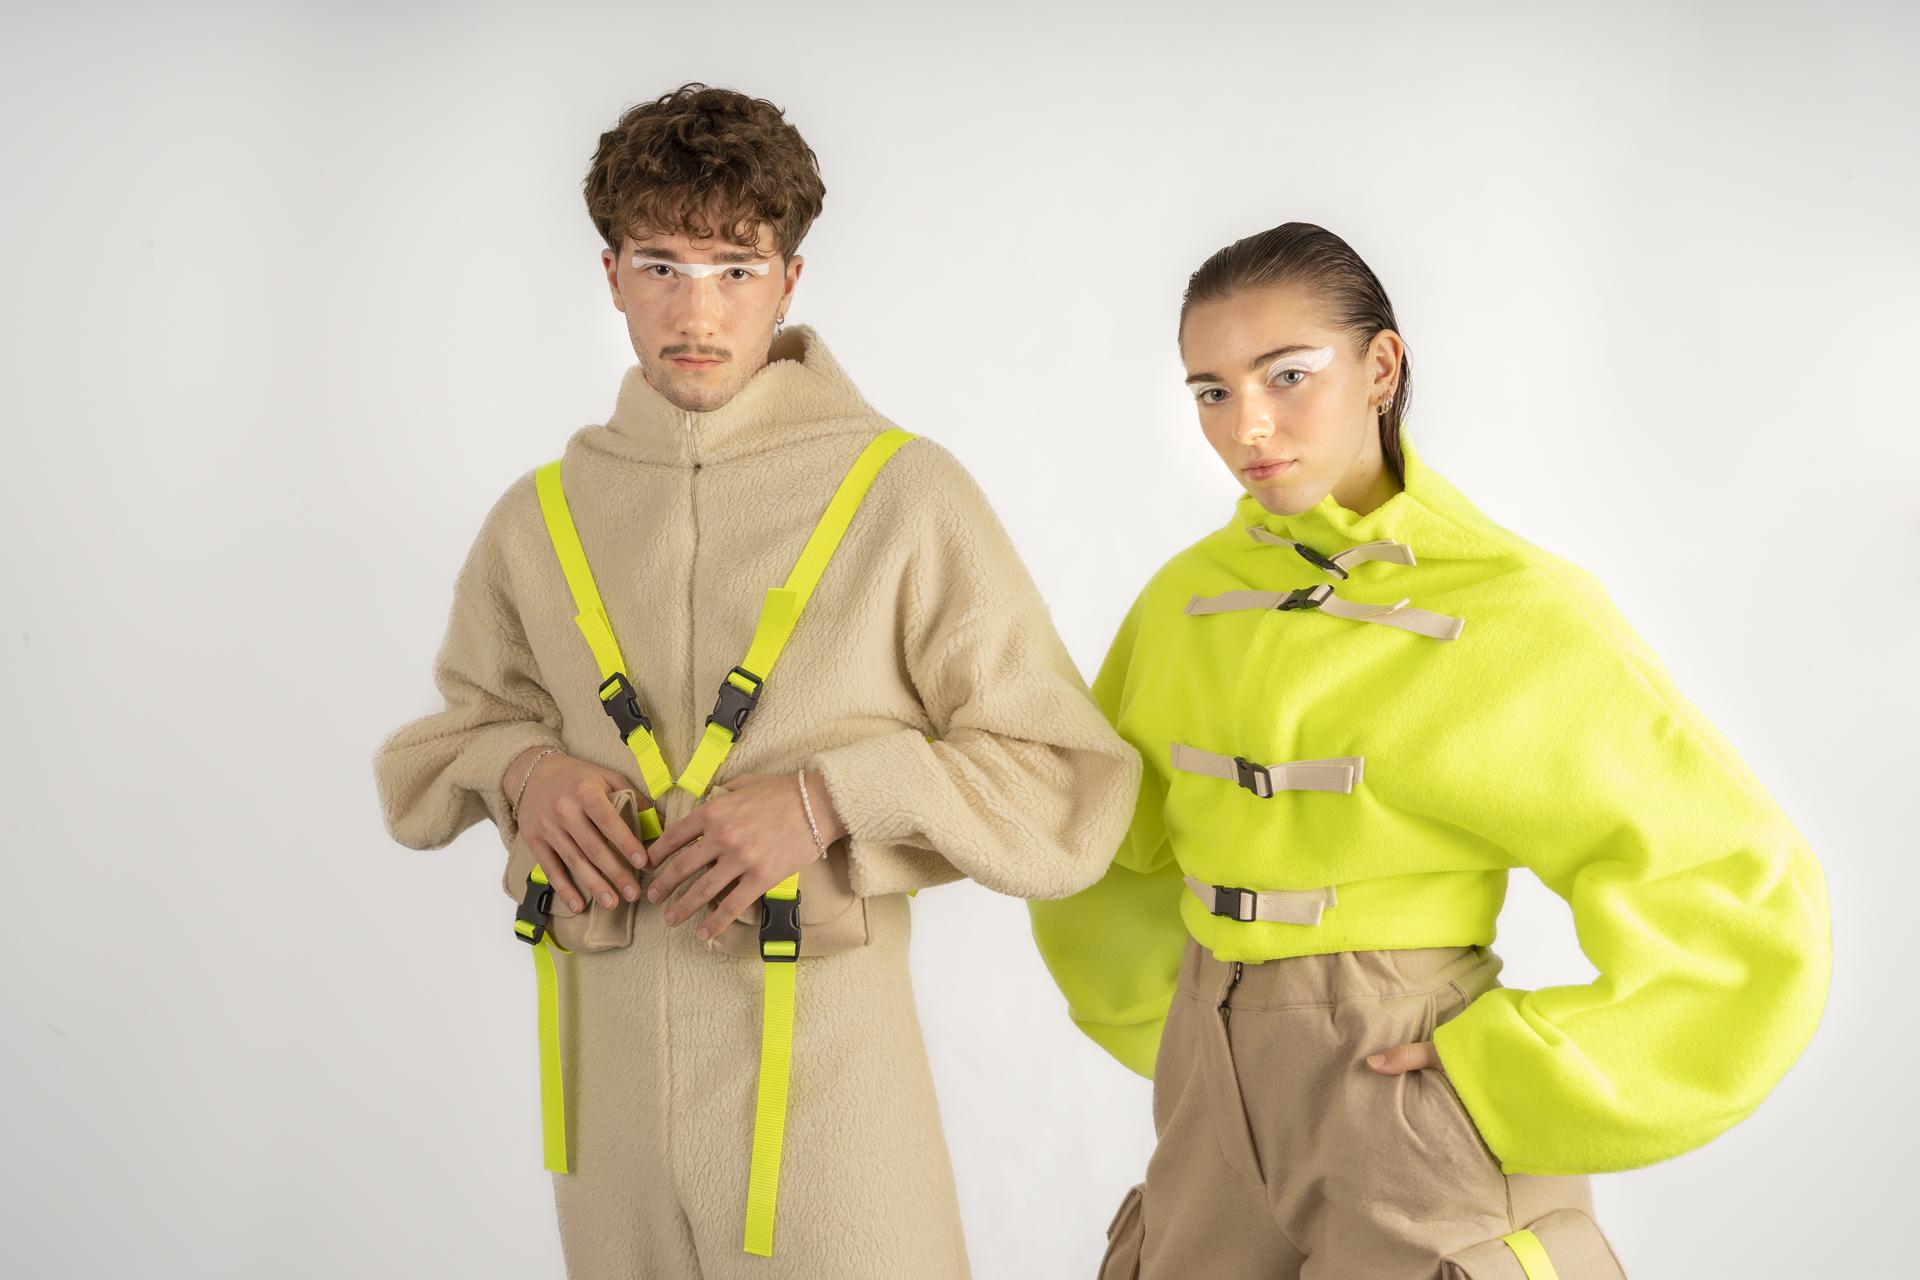 Zwei Studierende in neongelben Outfits